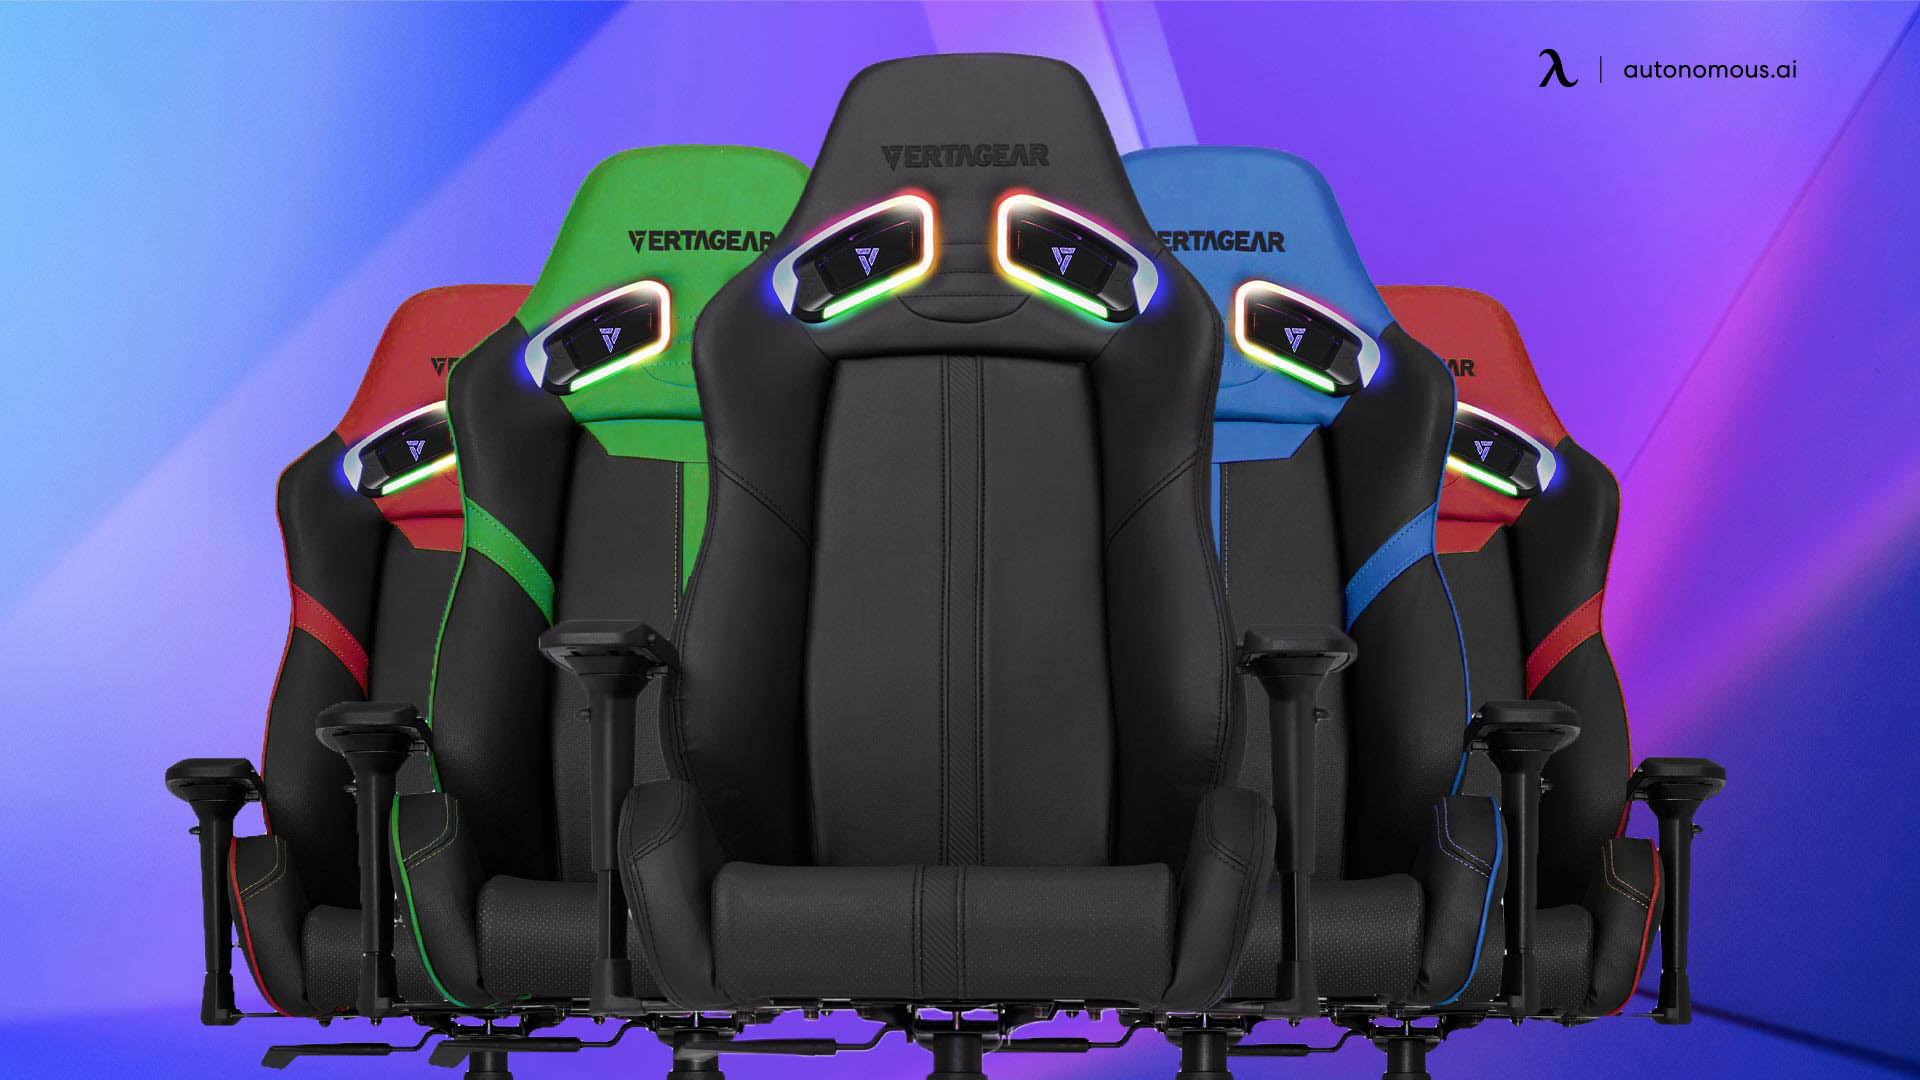 Vertagear SL5000 racing gaming chair